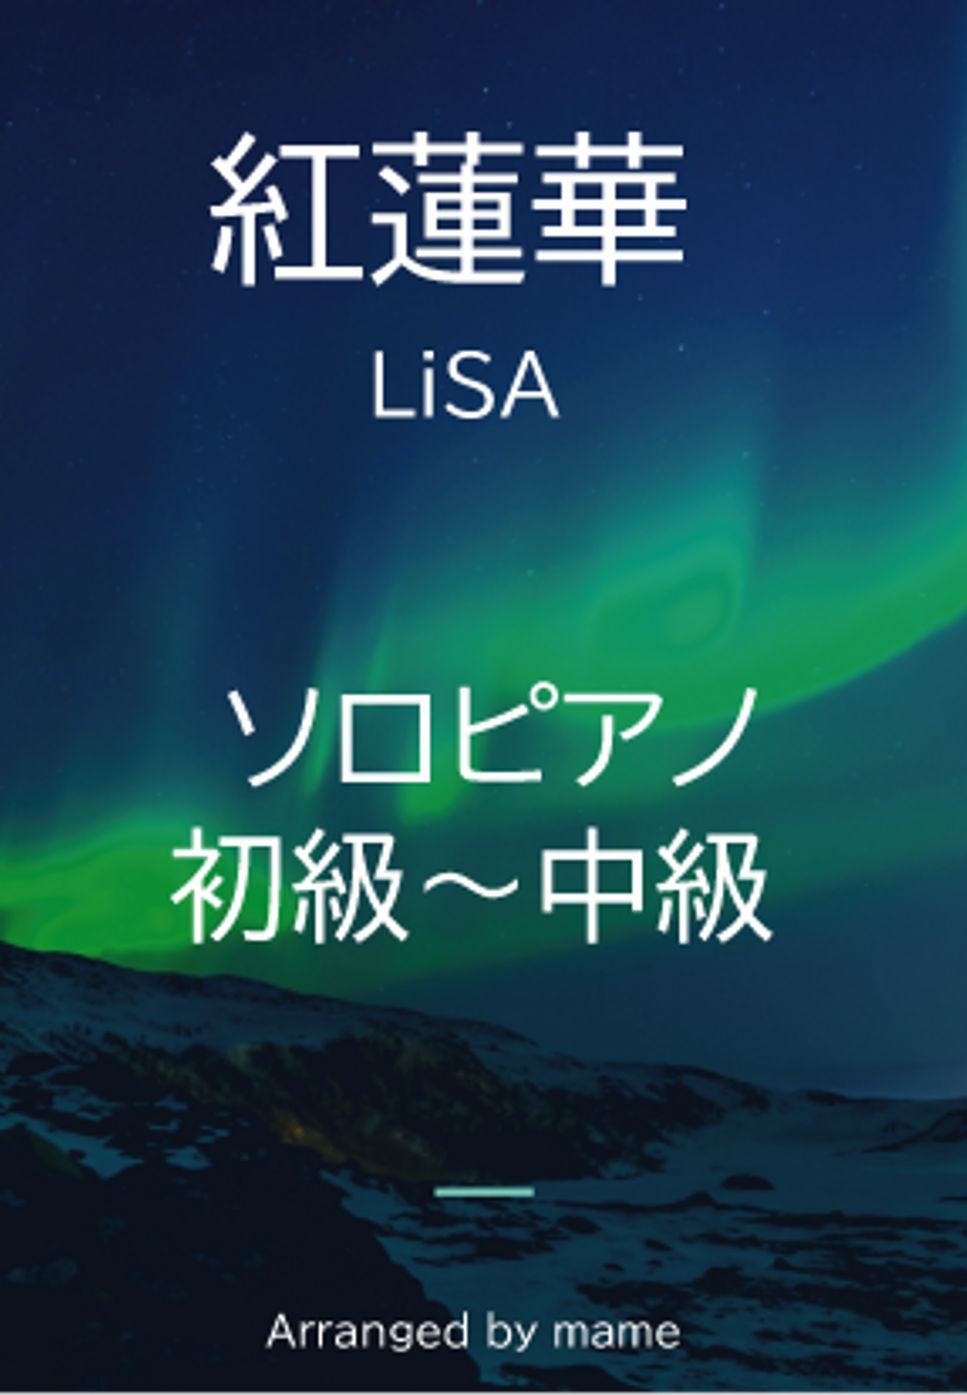 LiSA - 紅蓮華 by mame